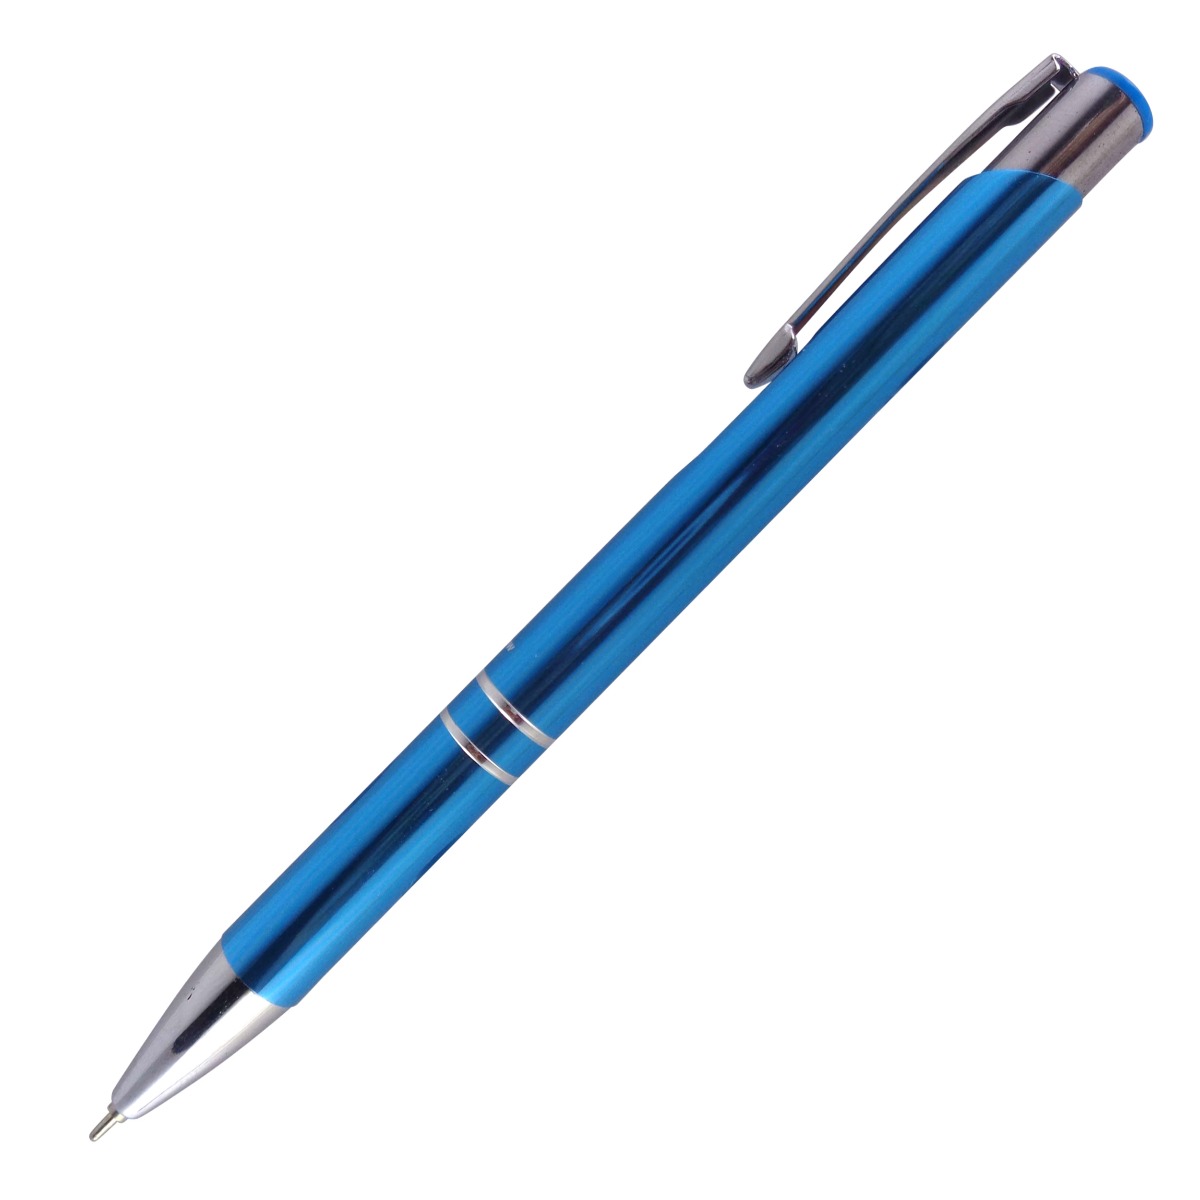 Cello Elegance Model: 15064 Butter flow Blue color body with silver clip medium tip retractable ball pen